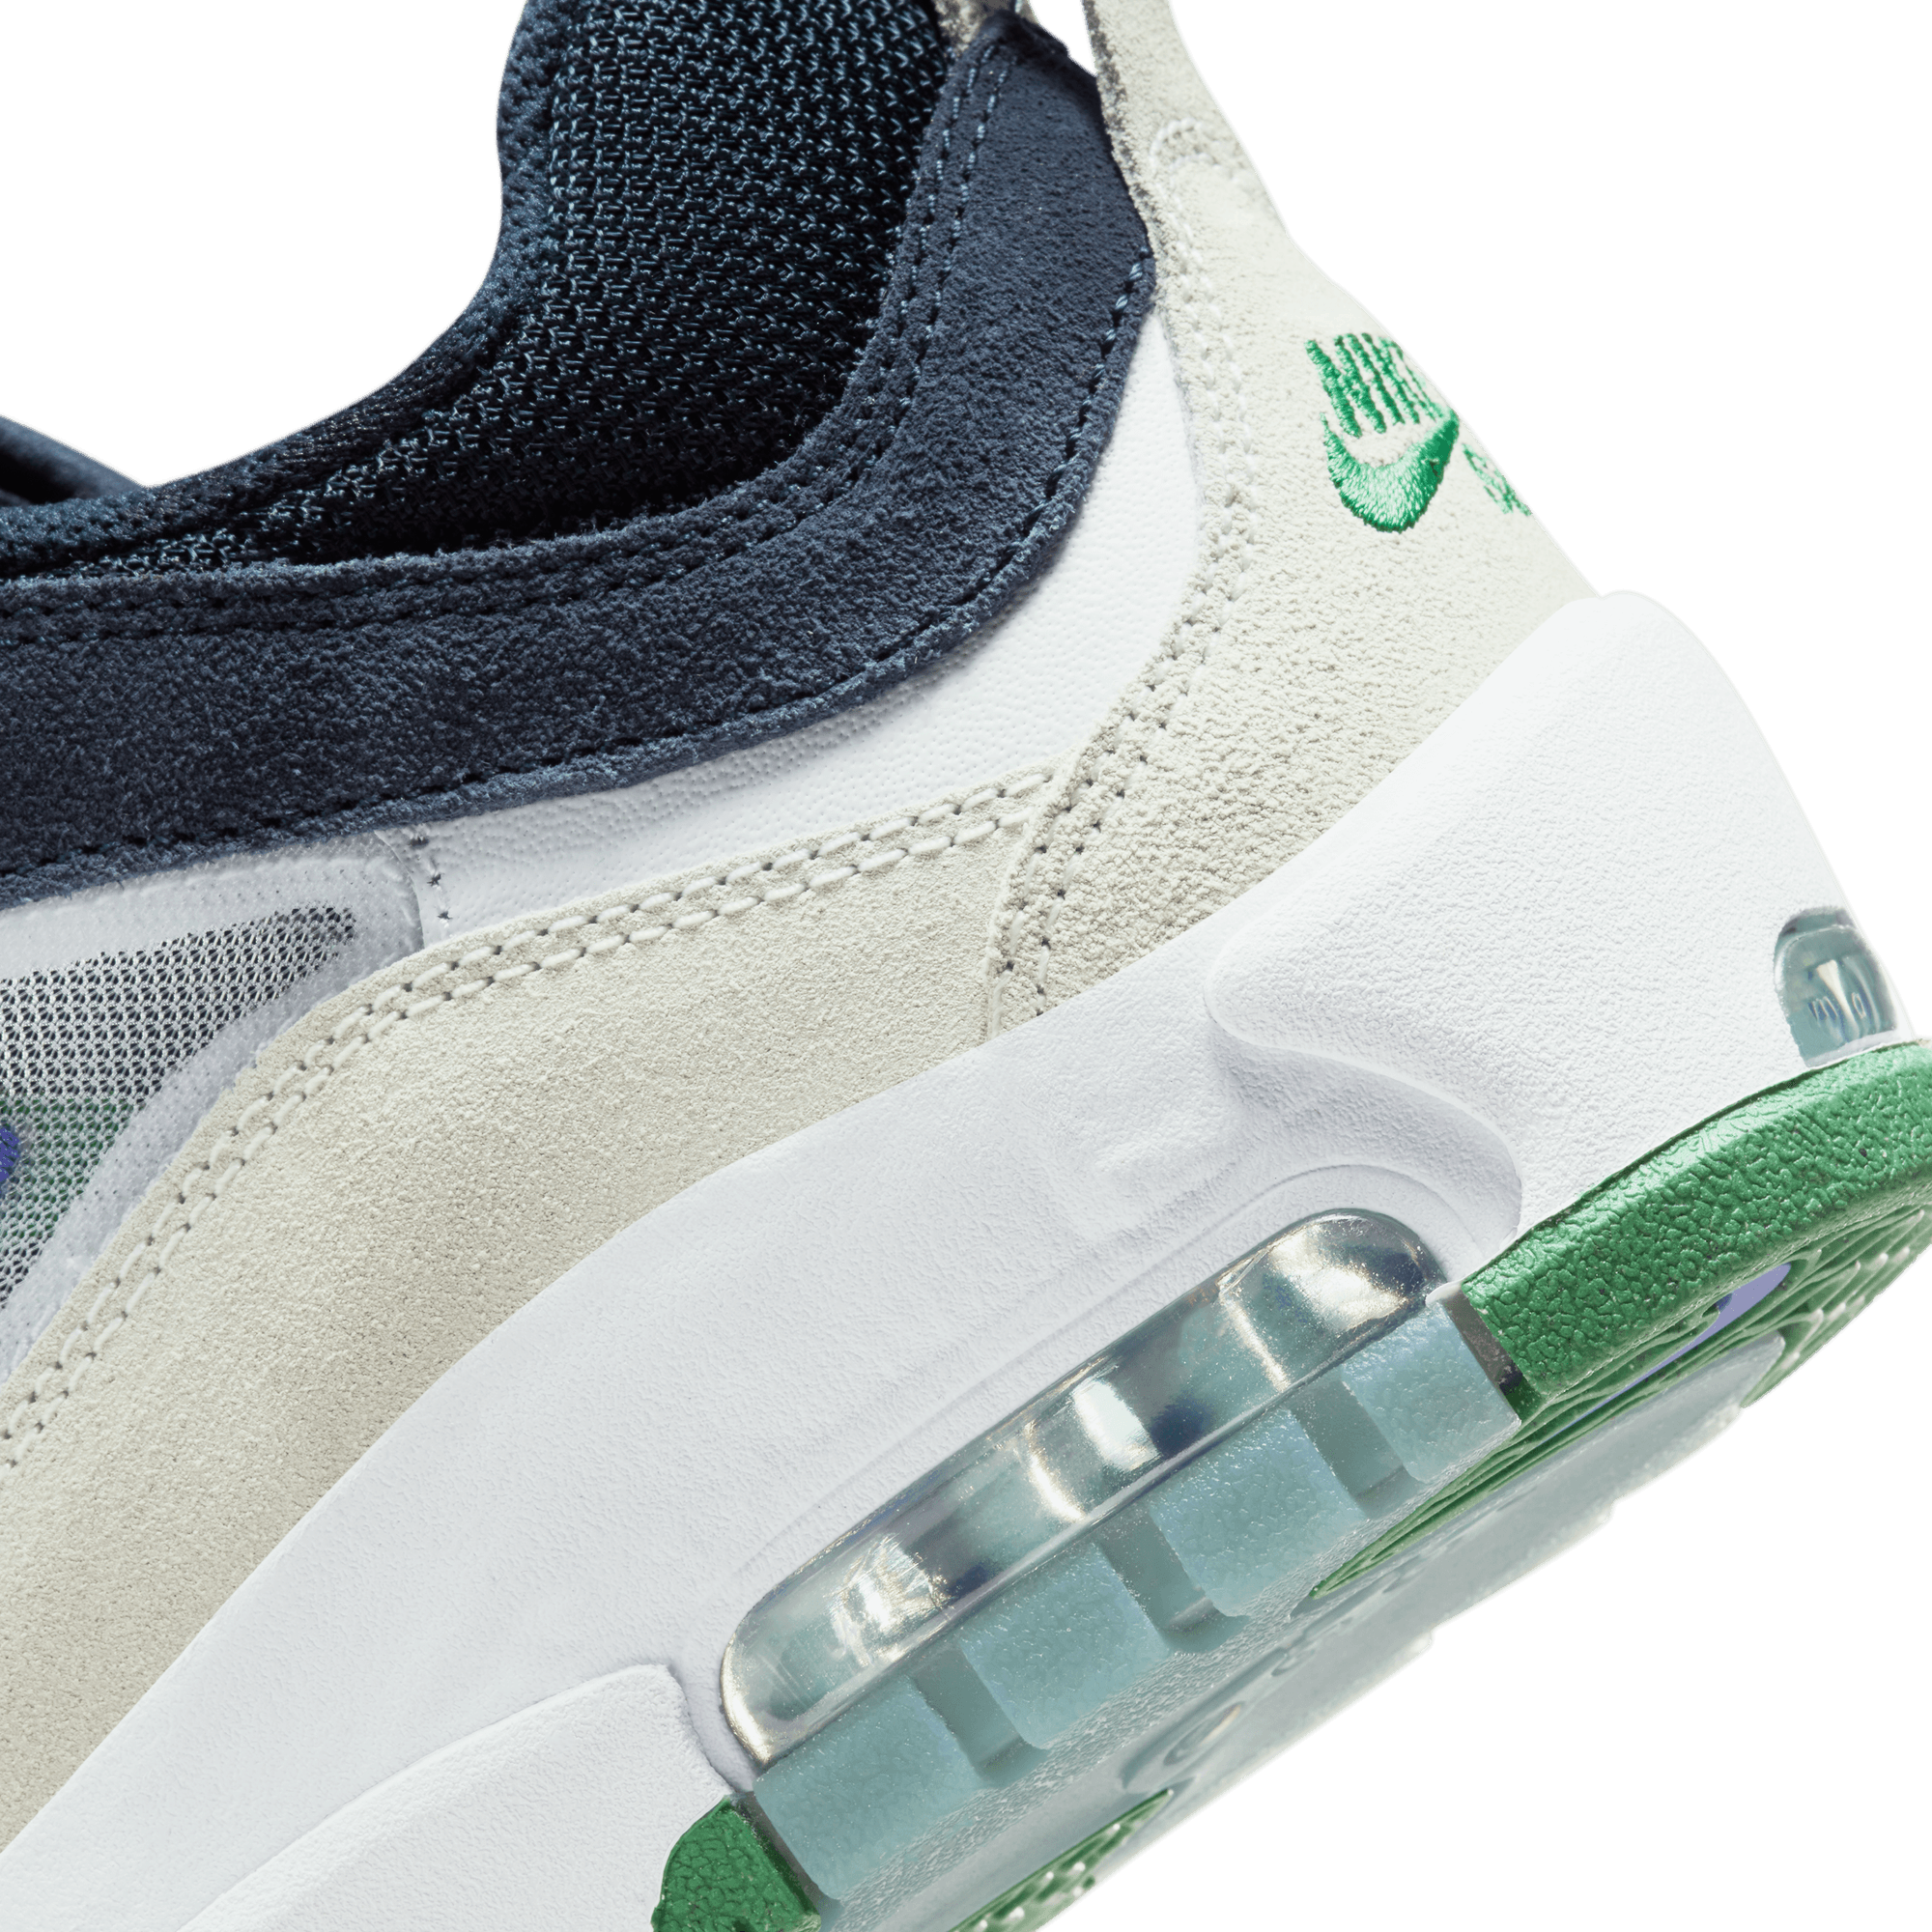 White/Obsidian Air Max Ishod Wair Nike SB Skate Shoe Detail